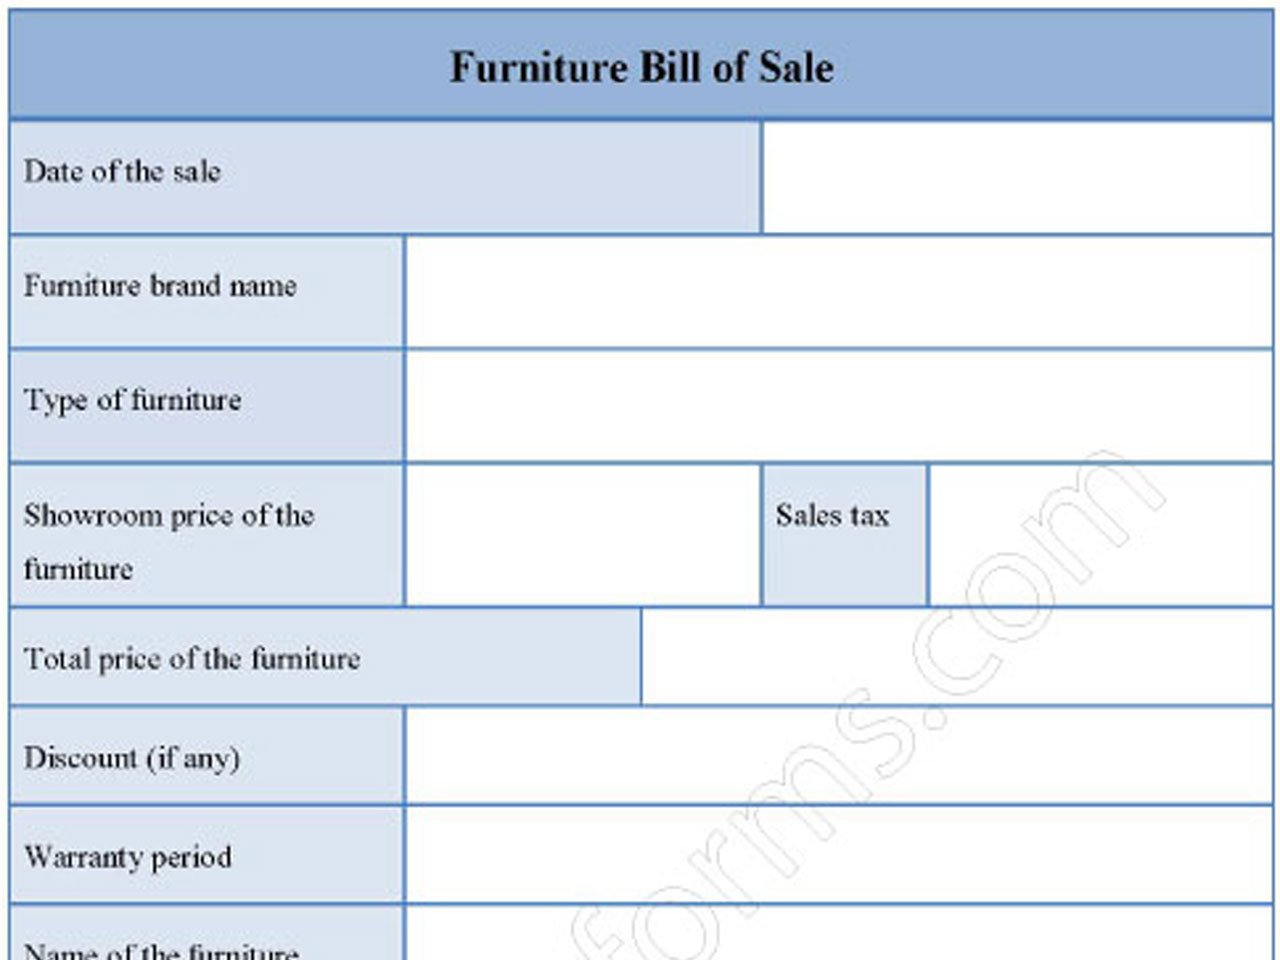 Furniture Bill of Sale Form